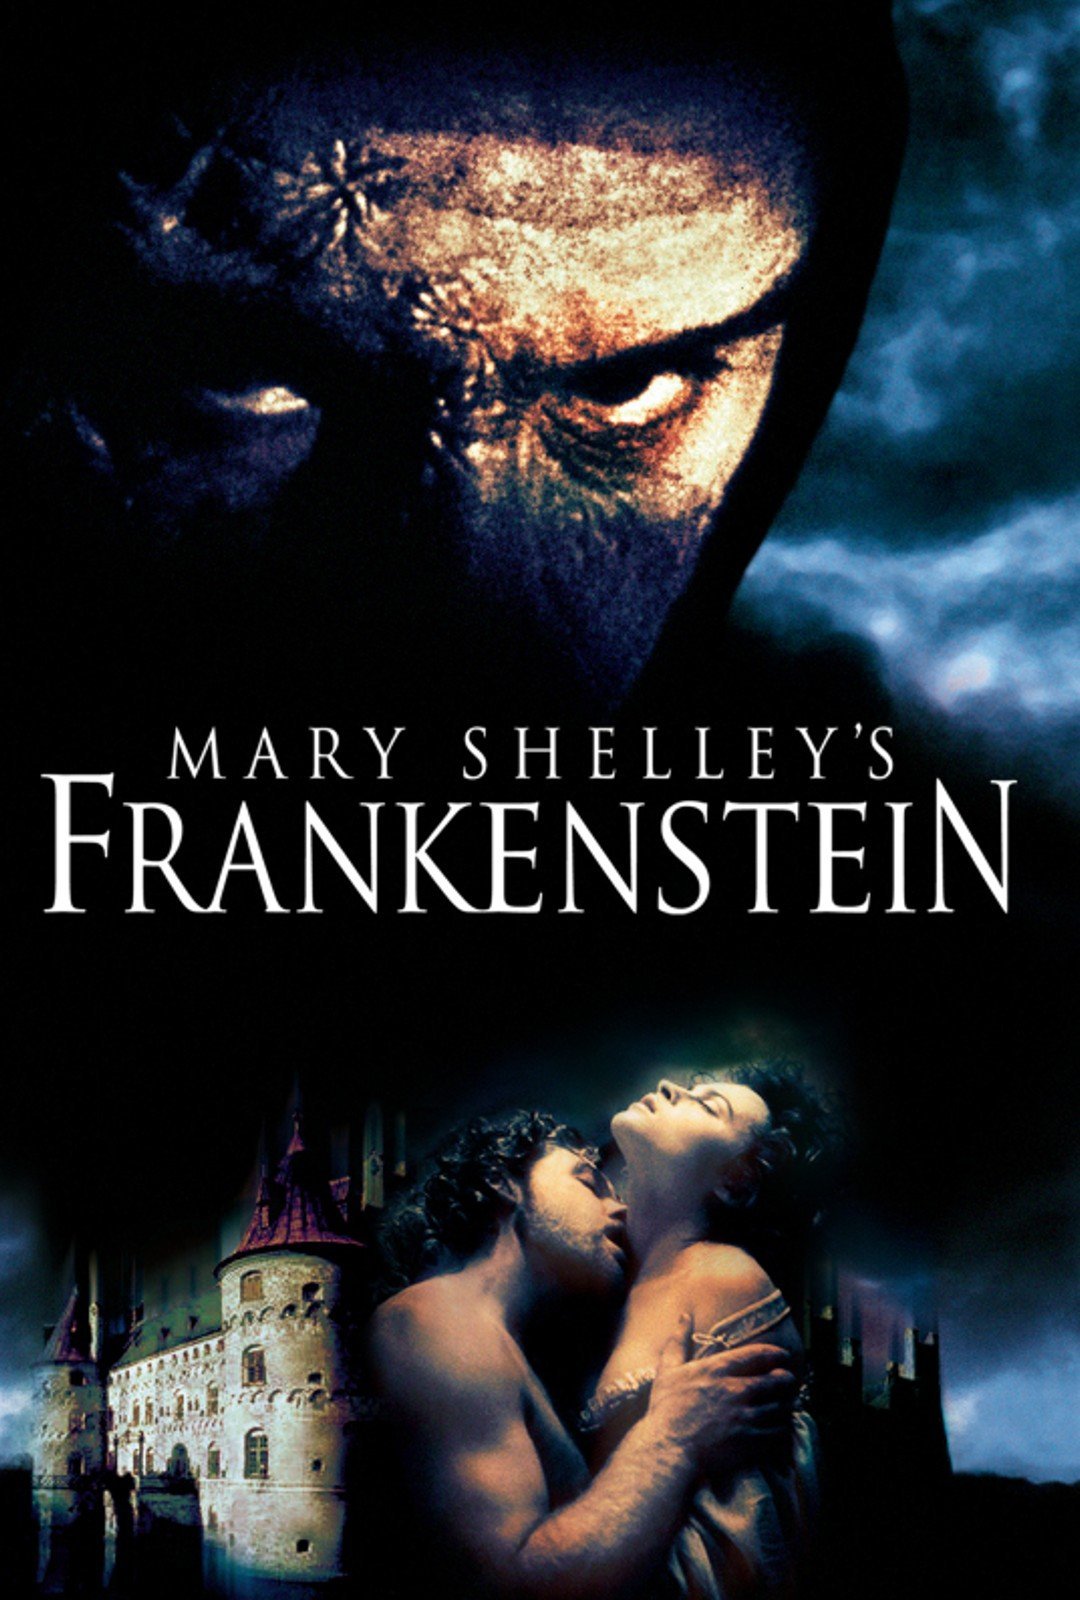 Mary Shelley's Frankenstein